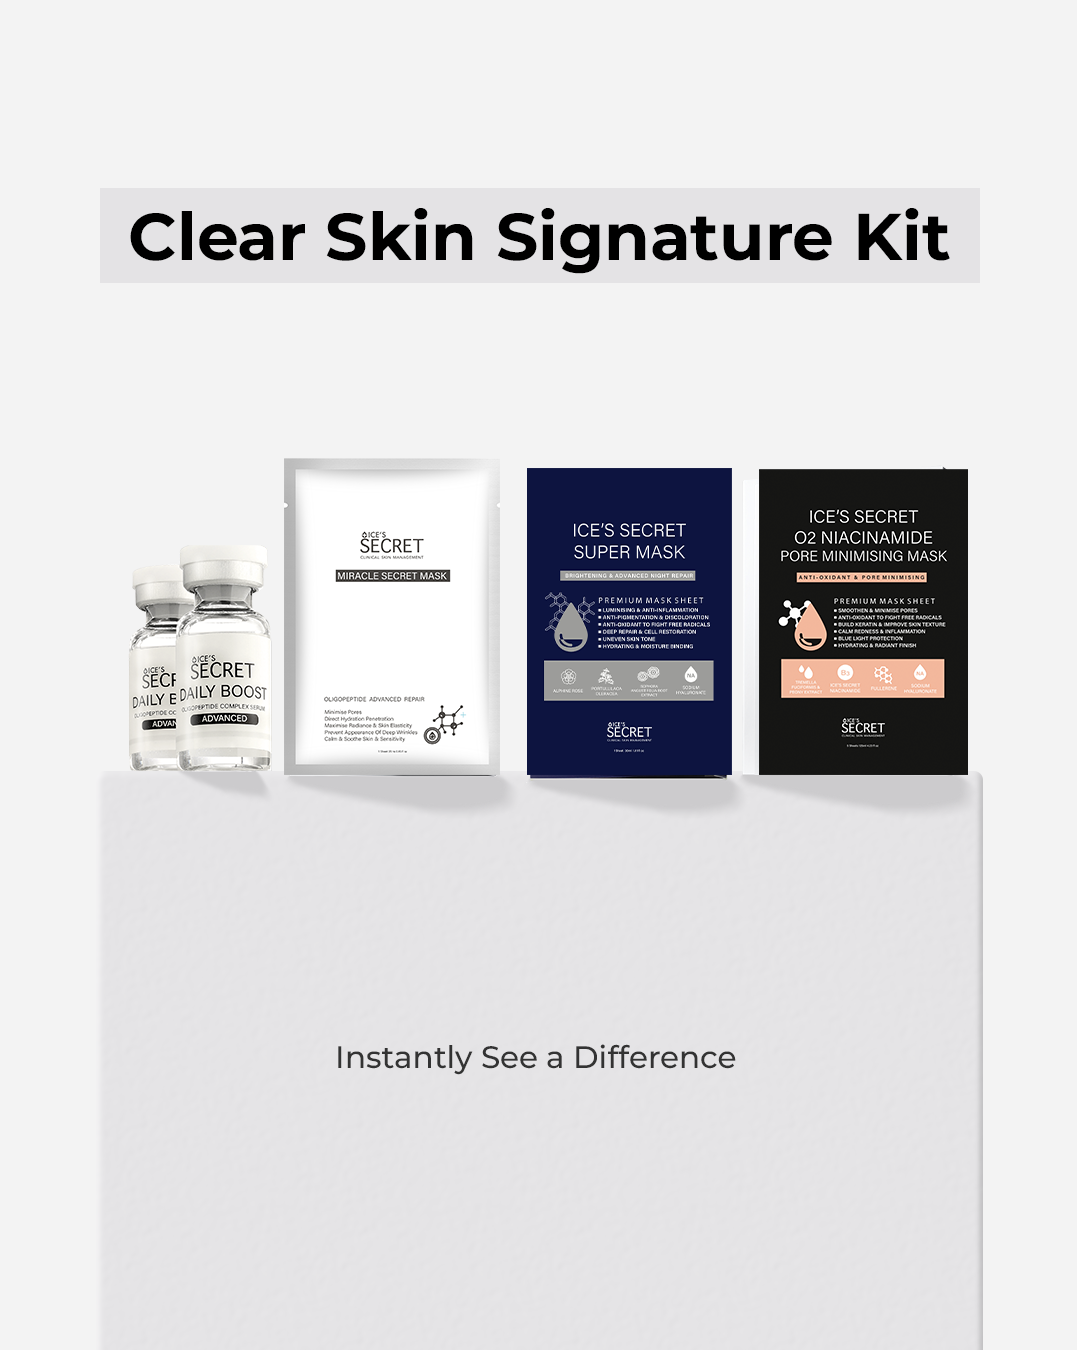 Ice’s Secret Clear Skin Signature Kit